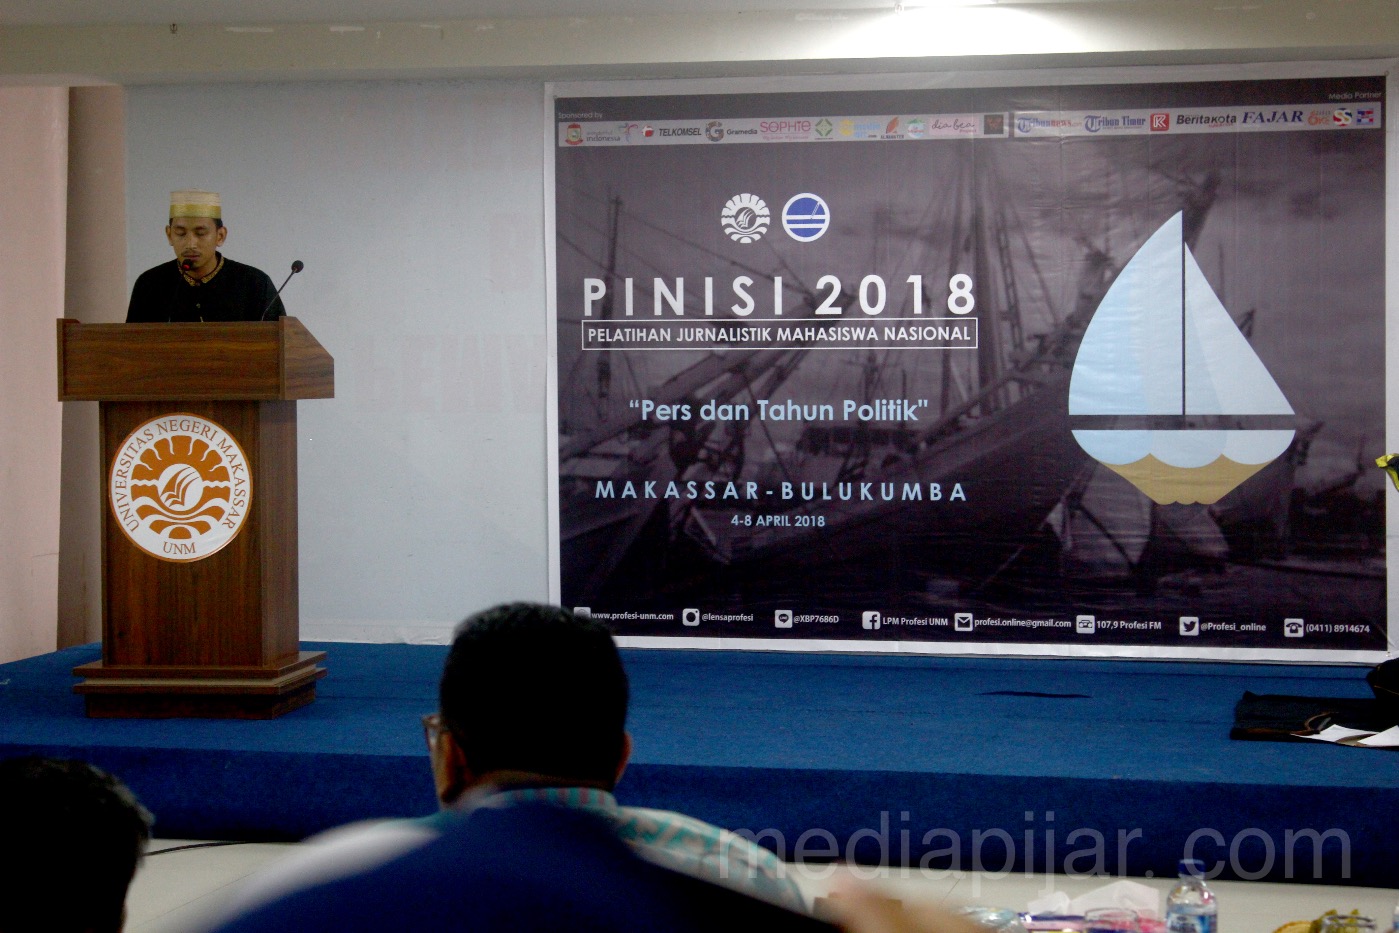 Sambutan oleh Resa sayhputra selaku Pimpinan Umum LPM Profesi dalam rangkaian acara pembukaan PINISI 2018 (05/04). (Fotografer: Muhammad Abdul Fattah)